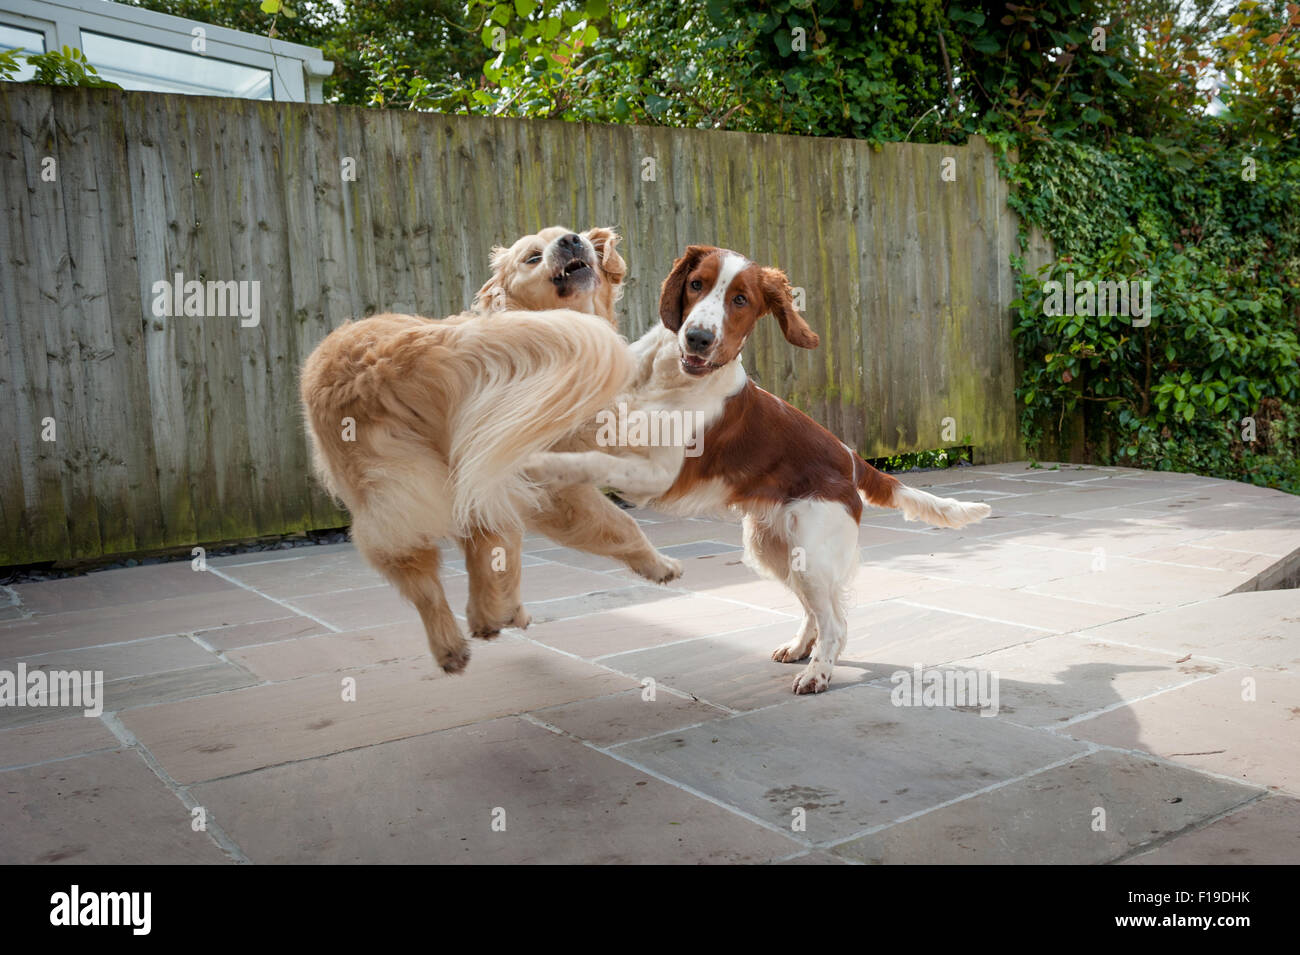 A golden retriever and a springer spaniel at play Photo - Alamy